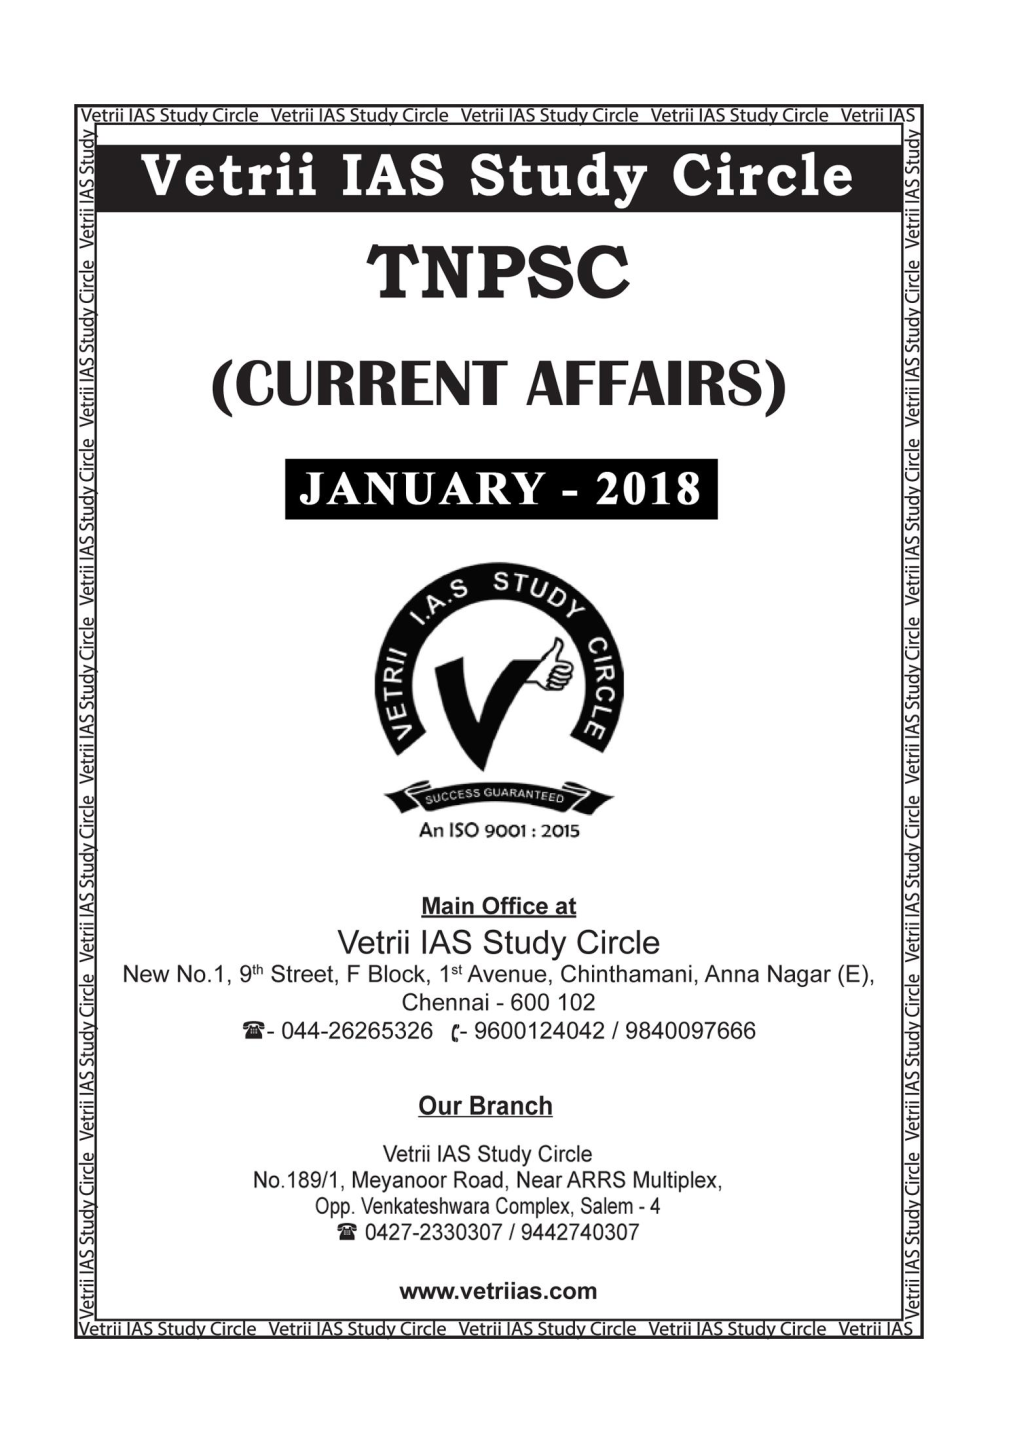 TNPSC Current Affairs English